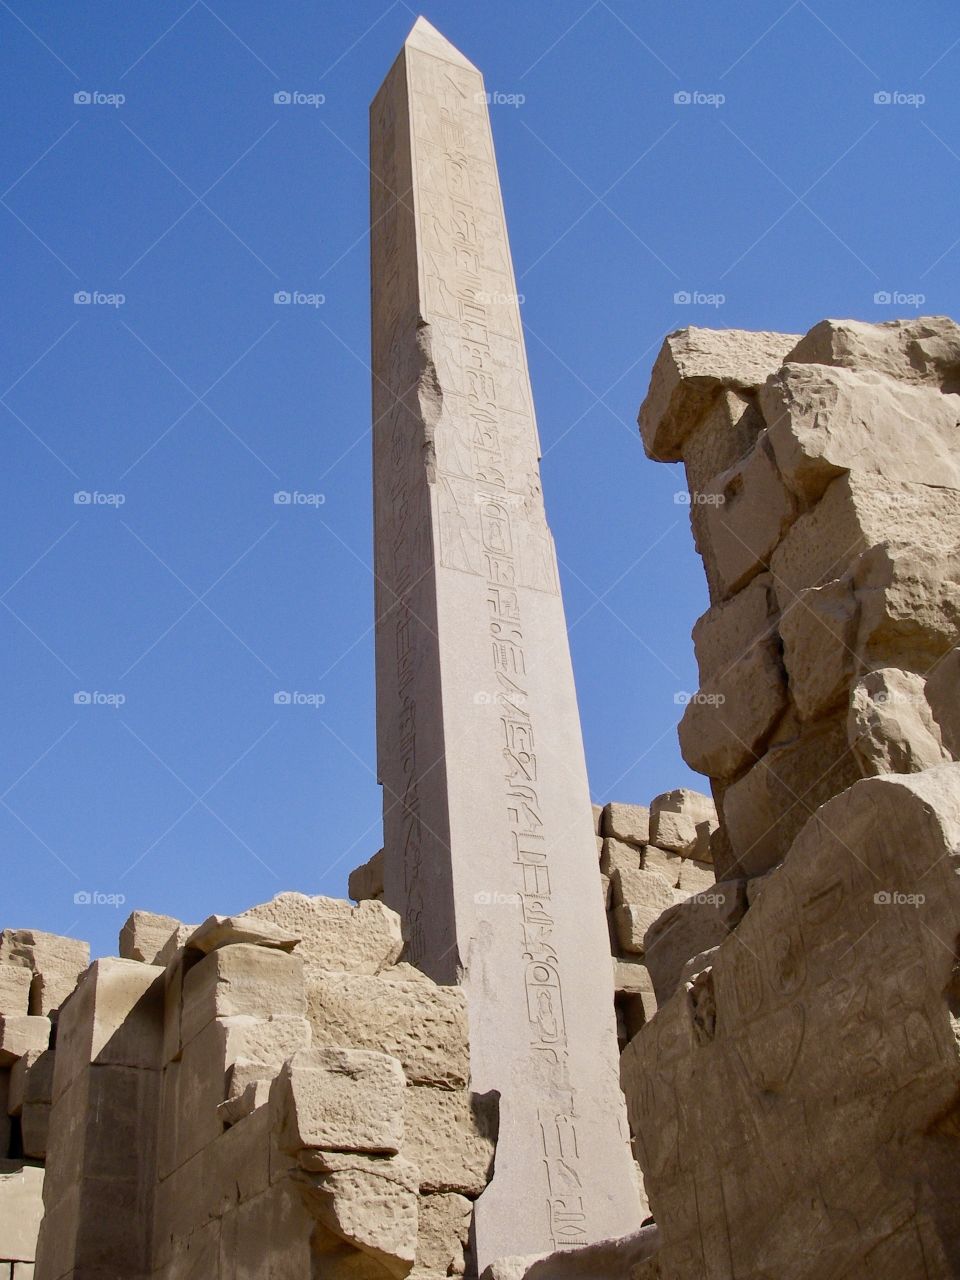 Egyptian obelisk and columns